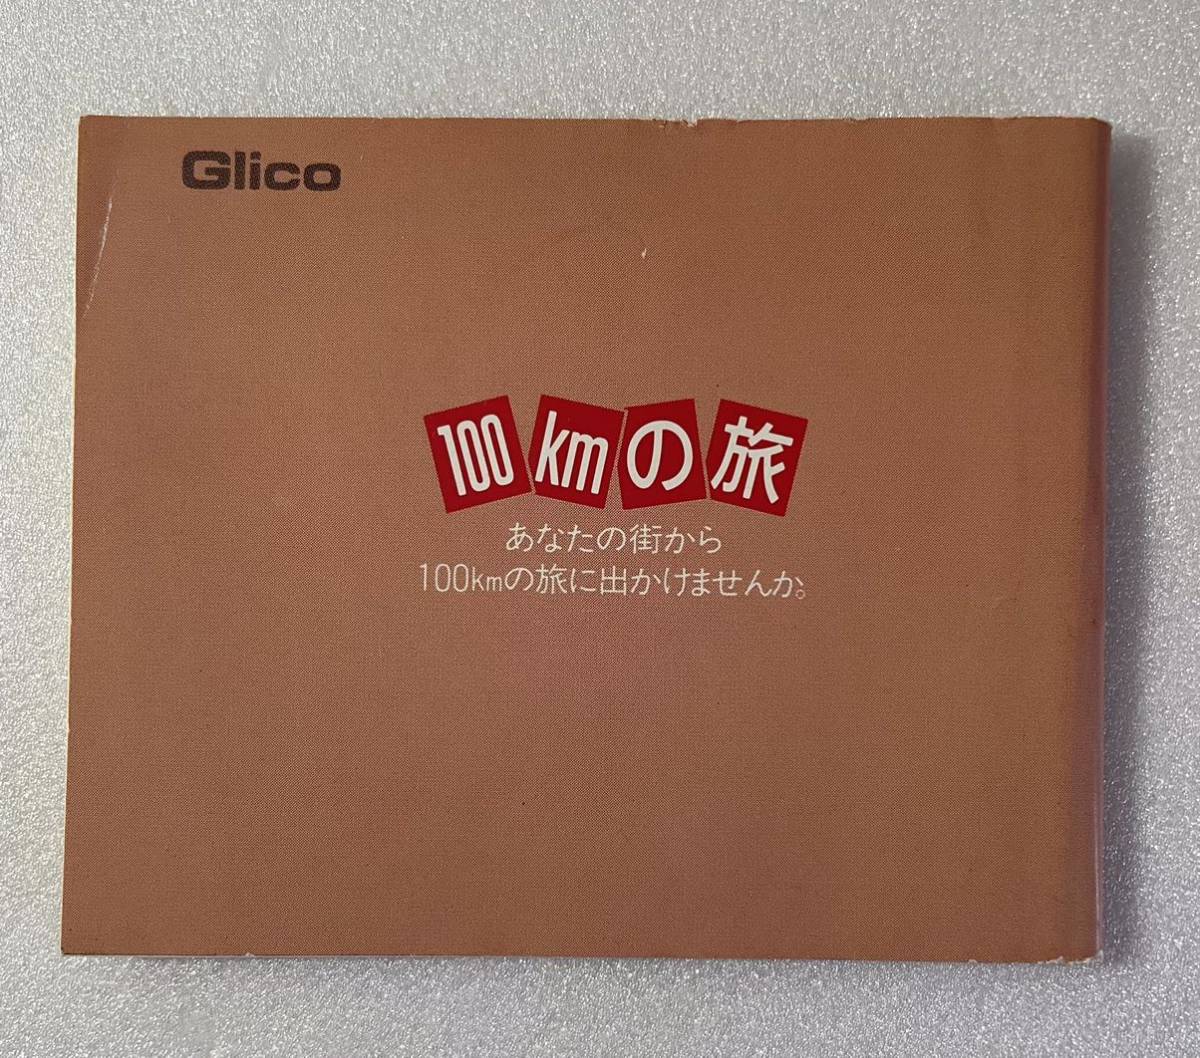 Glico グリコ 100kmの旅 南野陽子のオレンジカード 抽プレ オリジナルオレンジカード_画像5